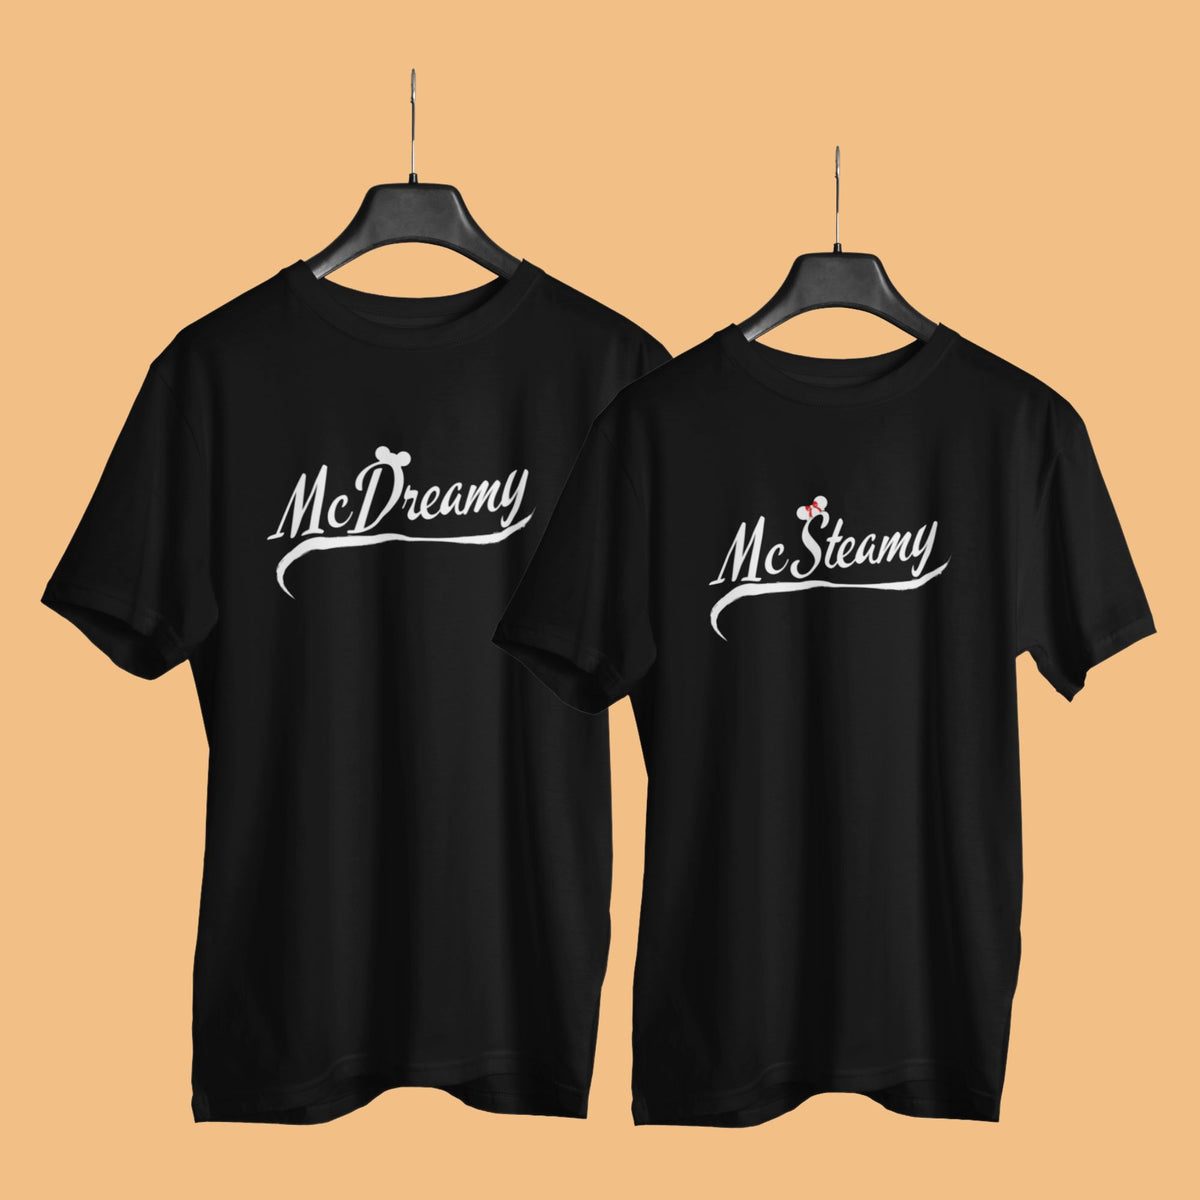 mcdreamy-mcsteamy-cotton-couple-tshirts-gogirgit-com